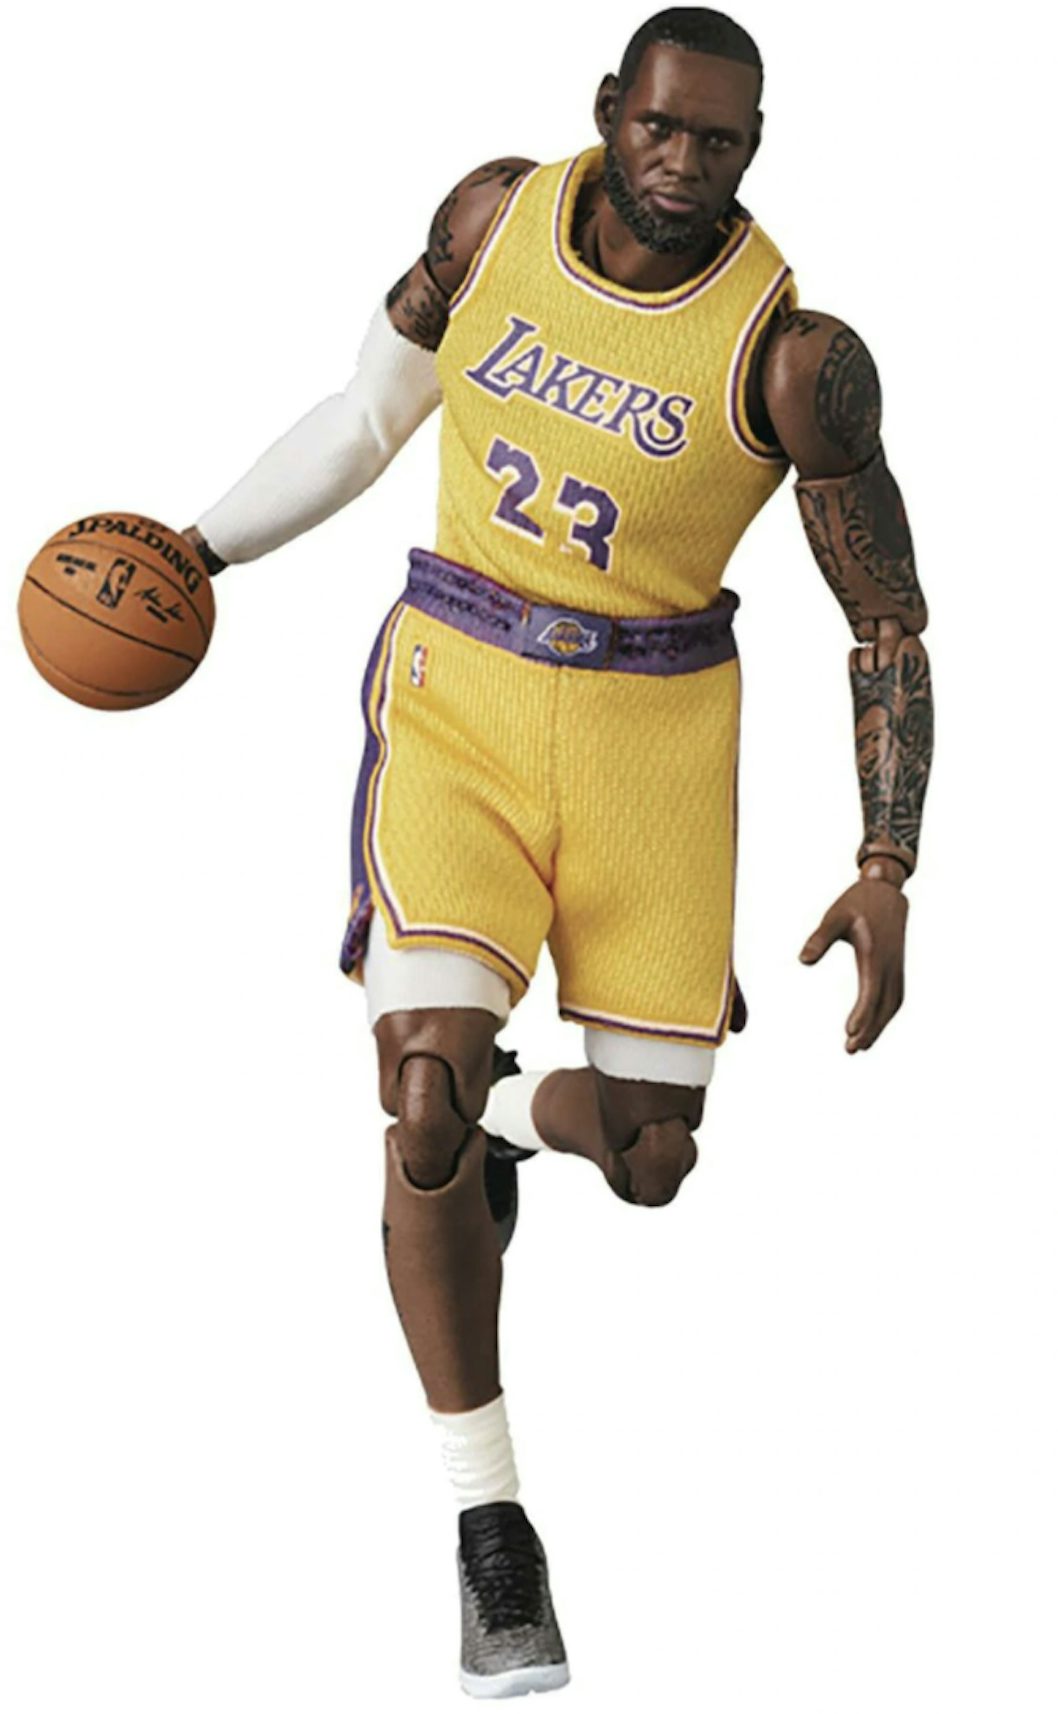 Funko Pop! Basketball Los Angeles Lakers Lebron James (White Jersey) Figure  #52 - US